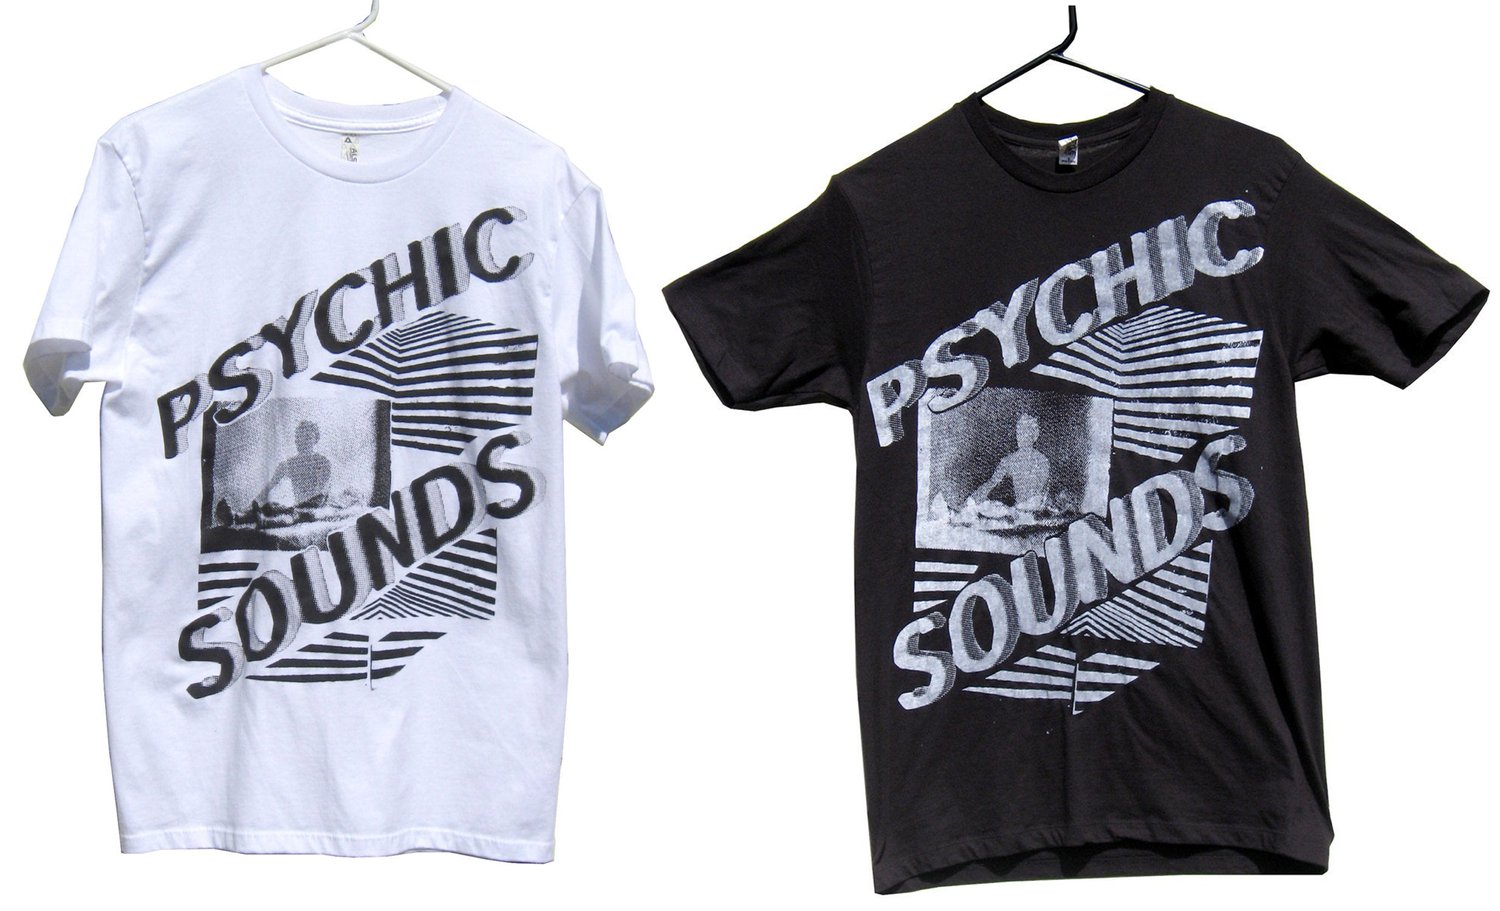 Psychic Sounds T-Shirt